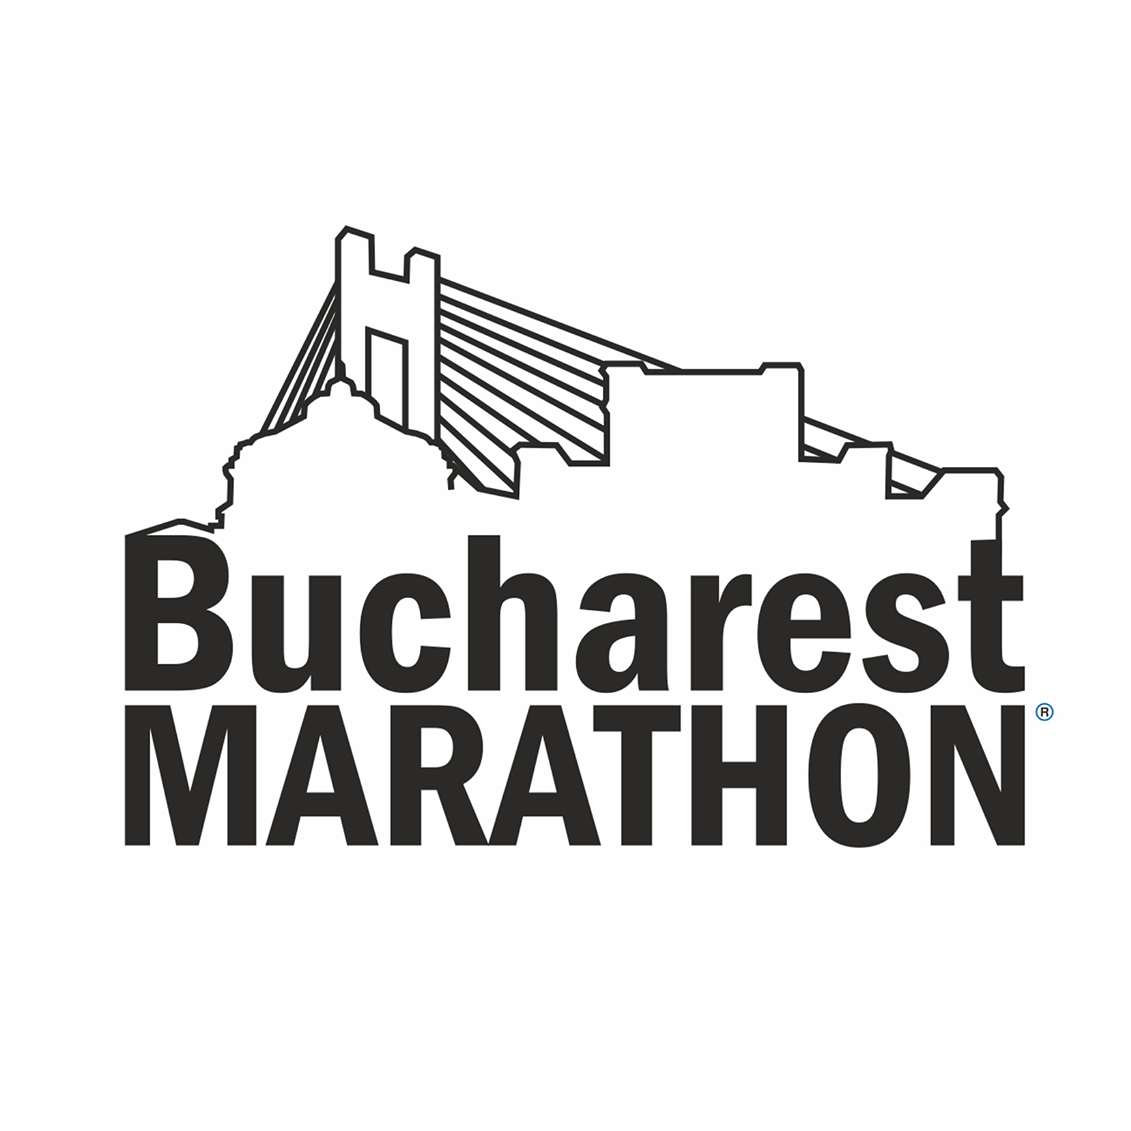 Bucharest Marathon logo on RaceRaves